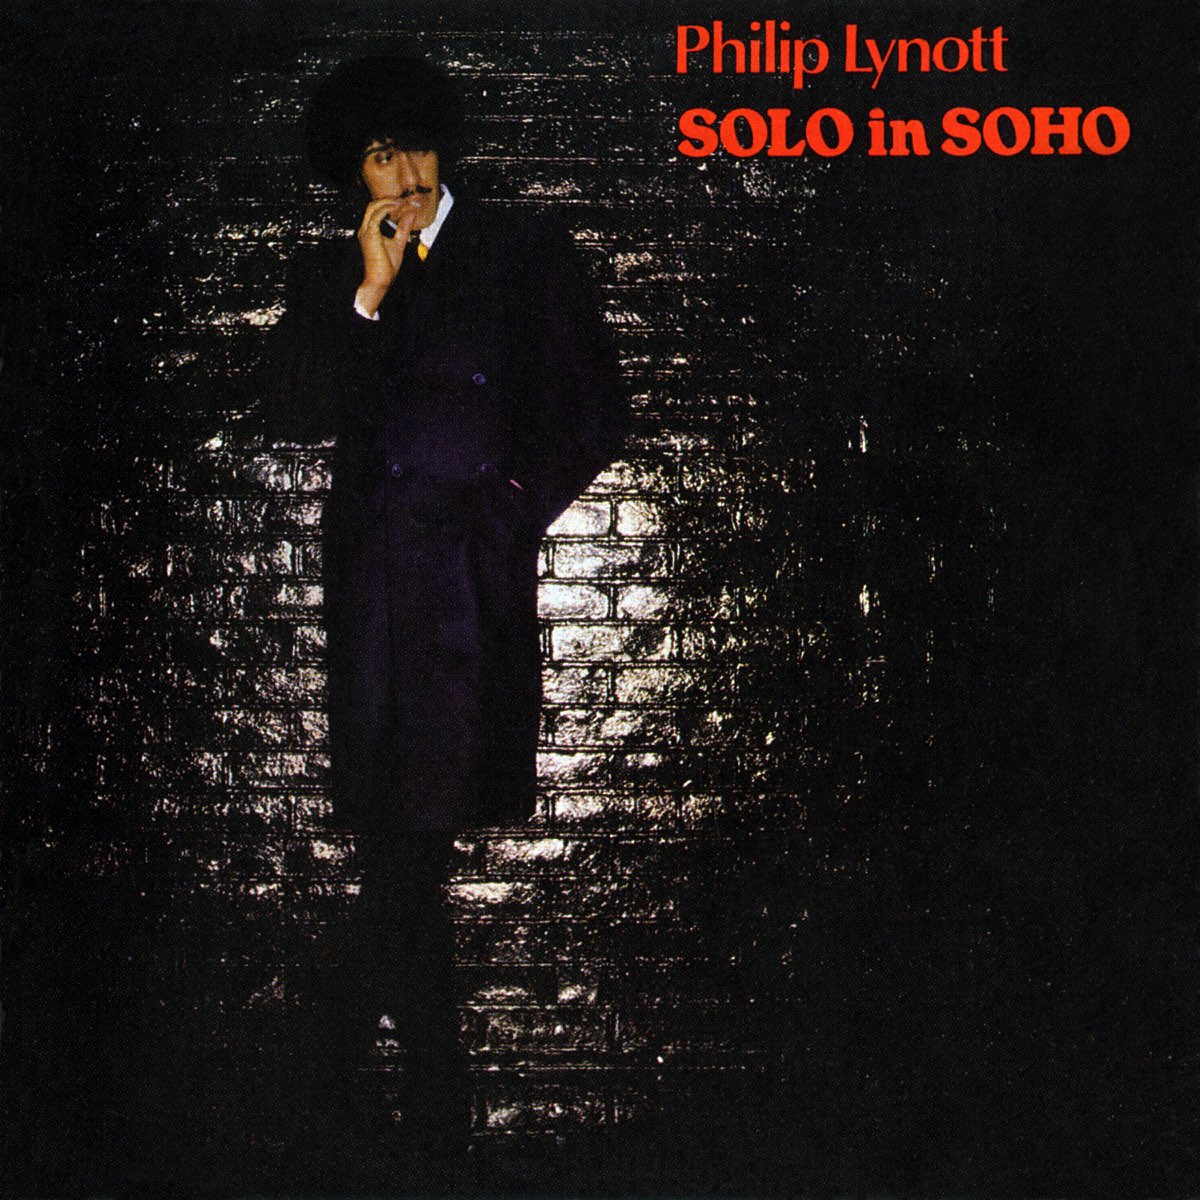 Phil Lynott - Solo In Soho (1980) 1200x1200bf-60